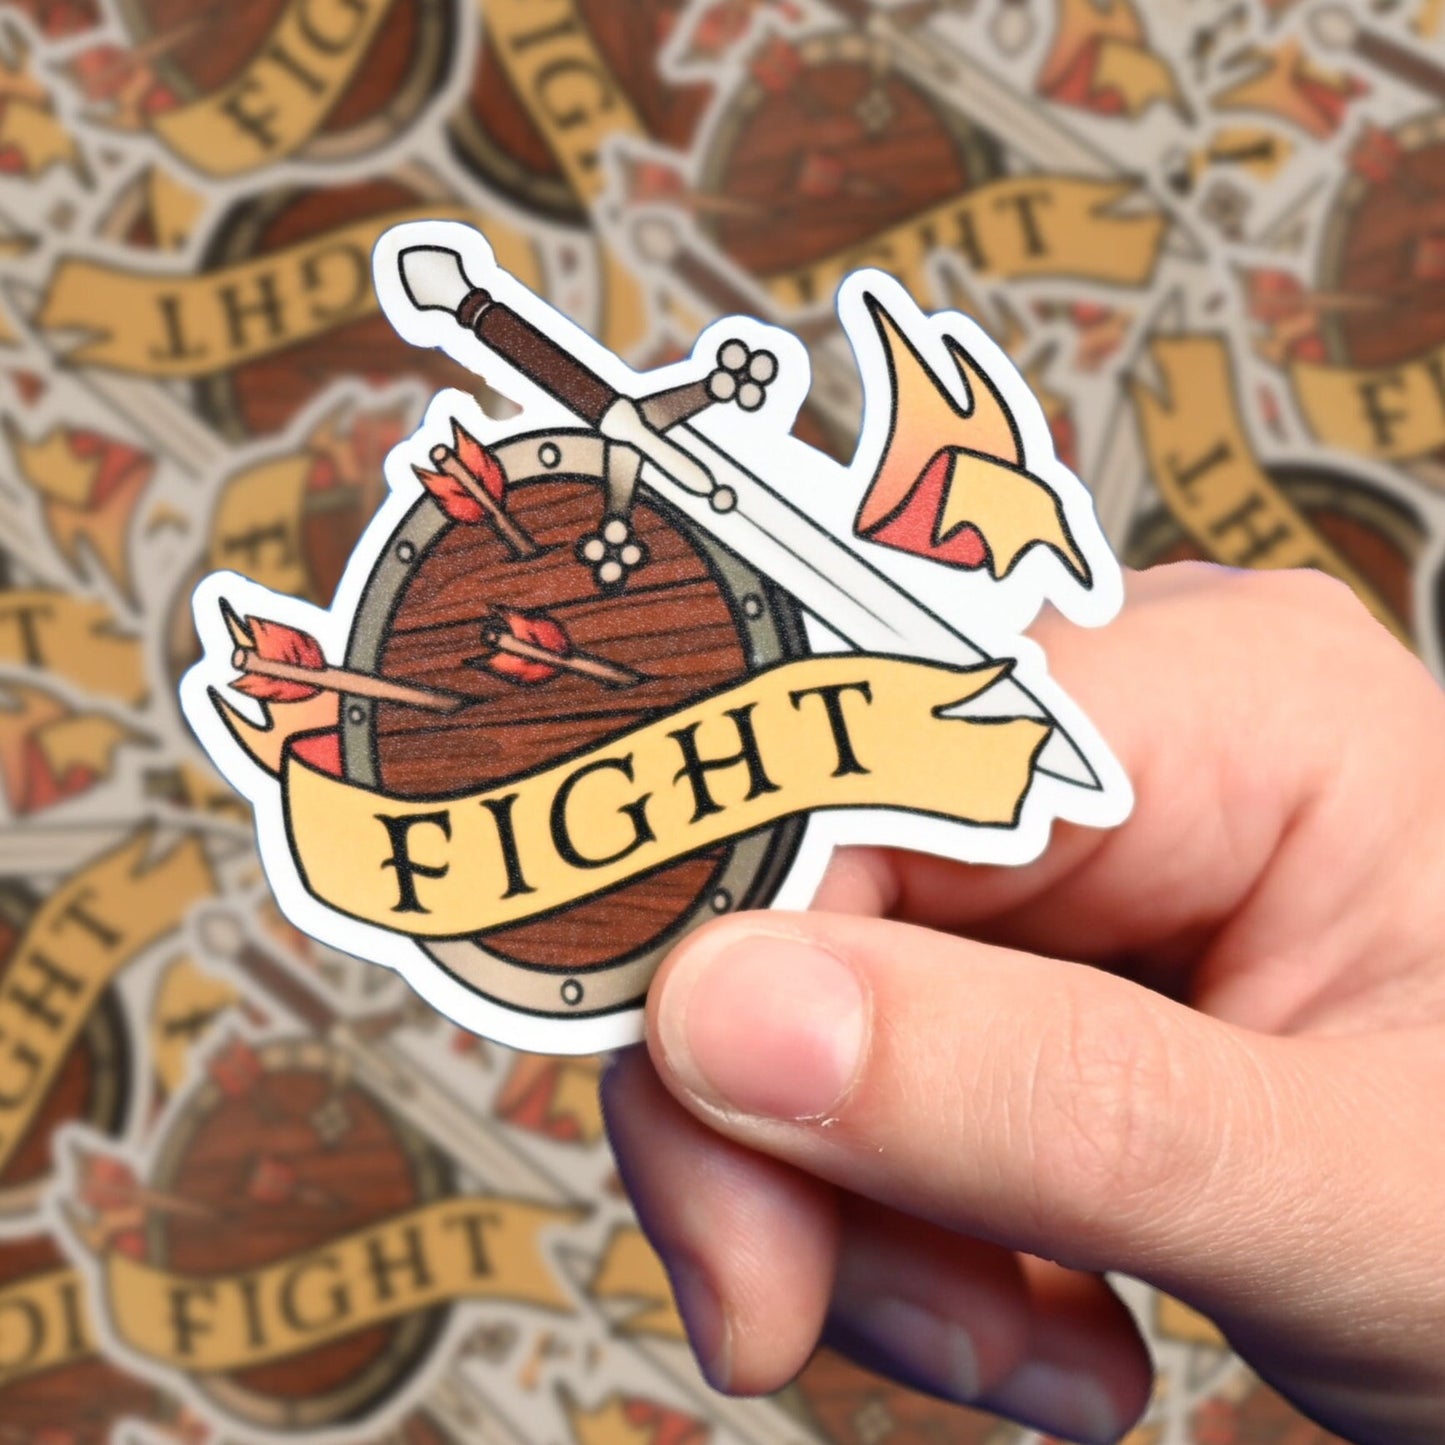 FIGHT Fighter Class 3" Vinyl Sticker